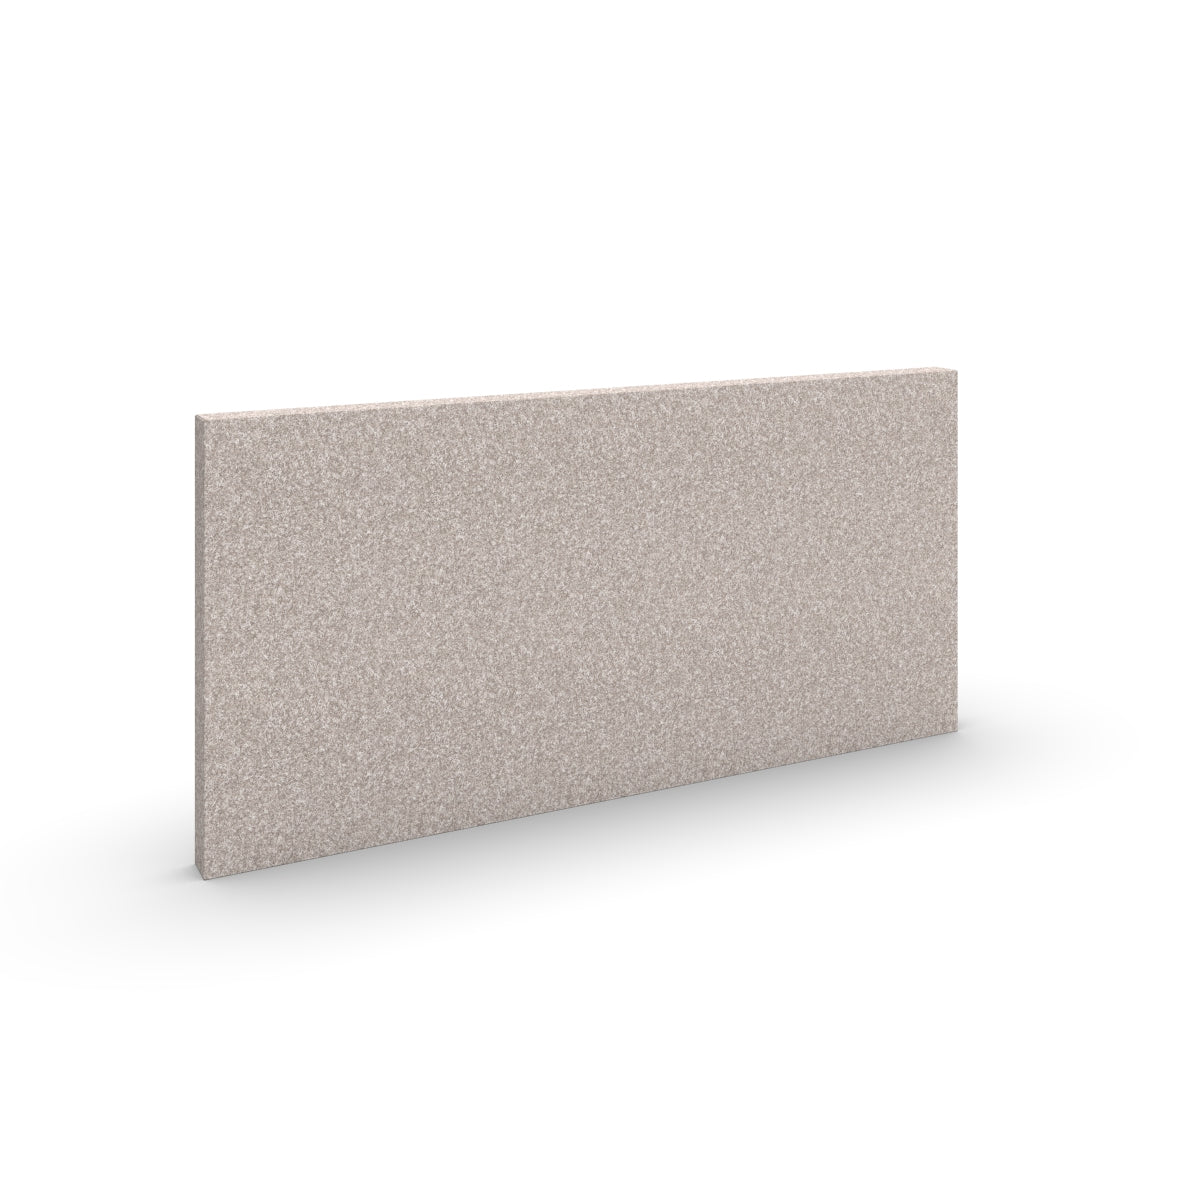 Basic wall sound absorber in dark beige acoustic wool felt textile. Size 58cmx116cm. Akustikkplater og lyddemping vegg